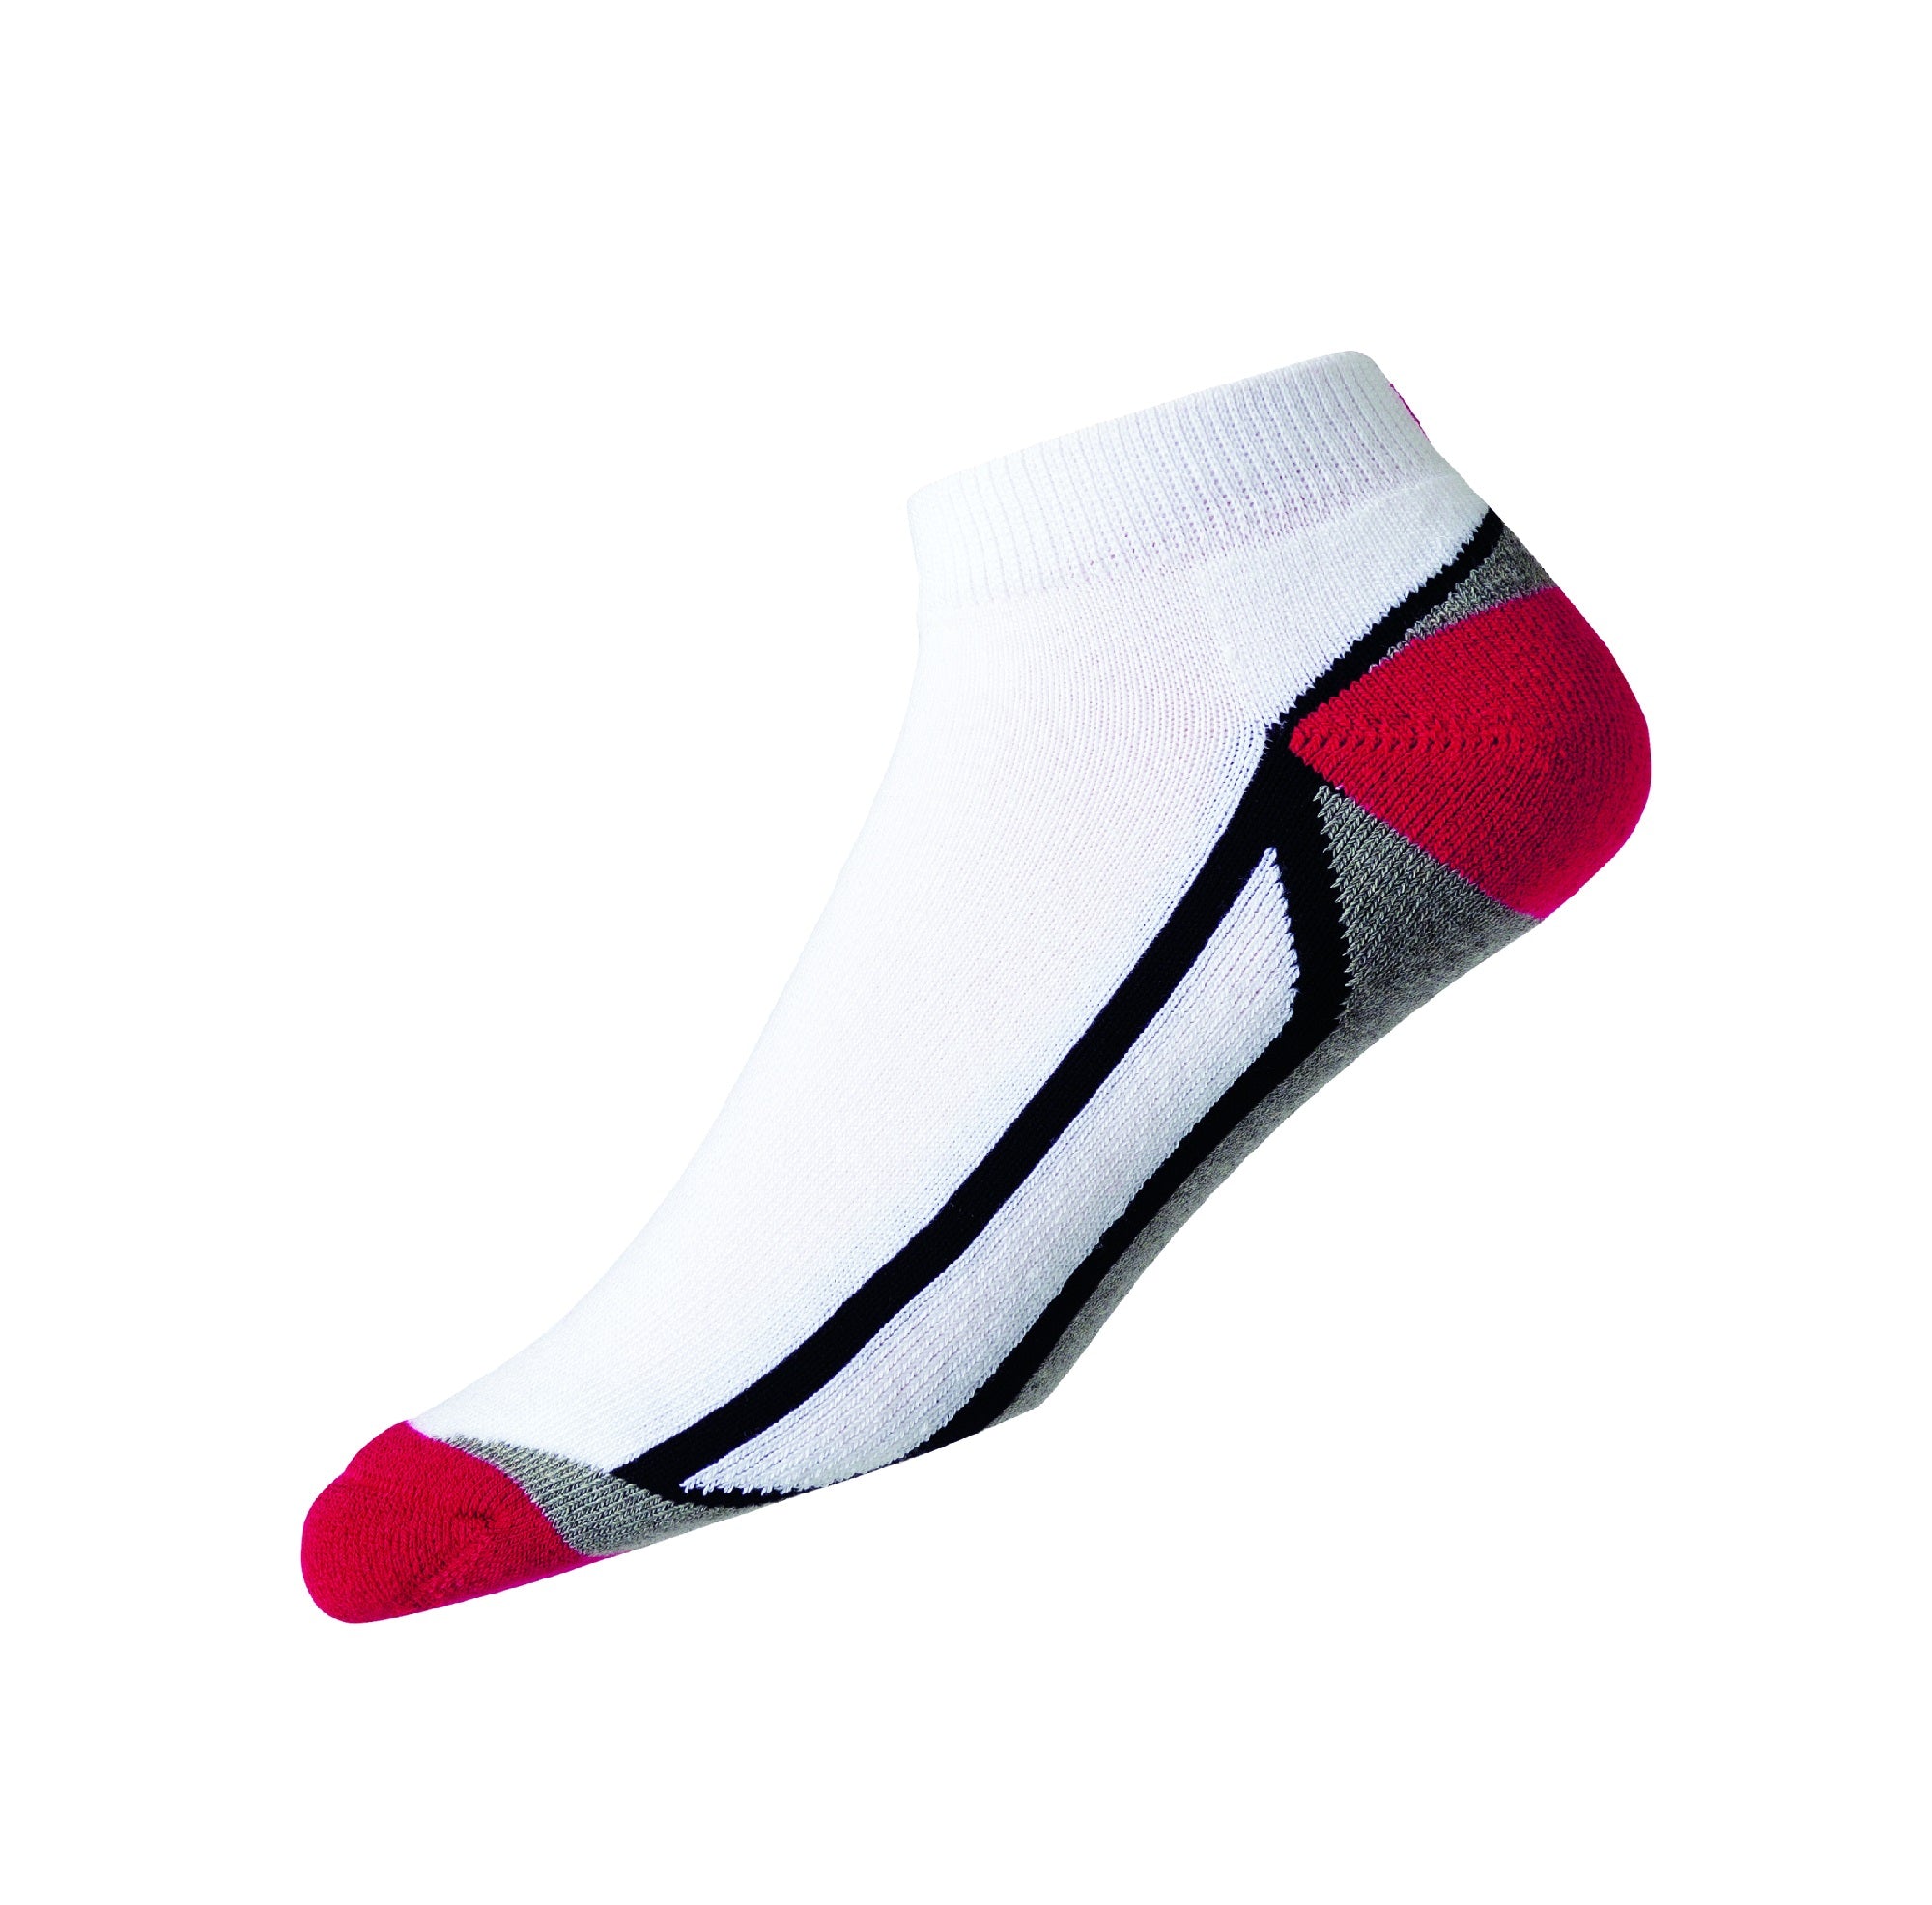 footjoy-prodry-sport-golf-socks-16120m-wht-blk-red